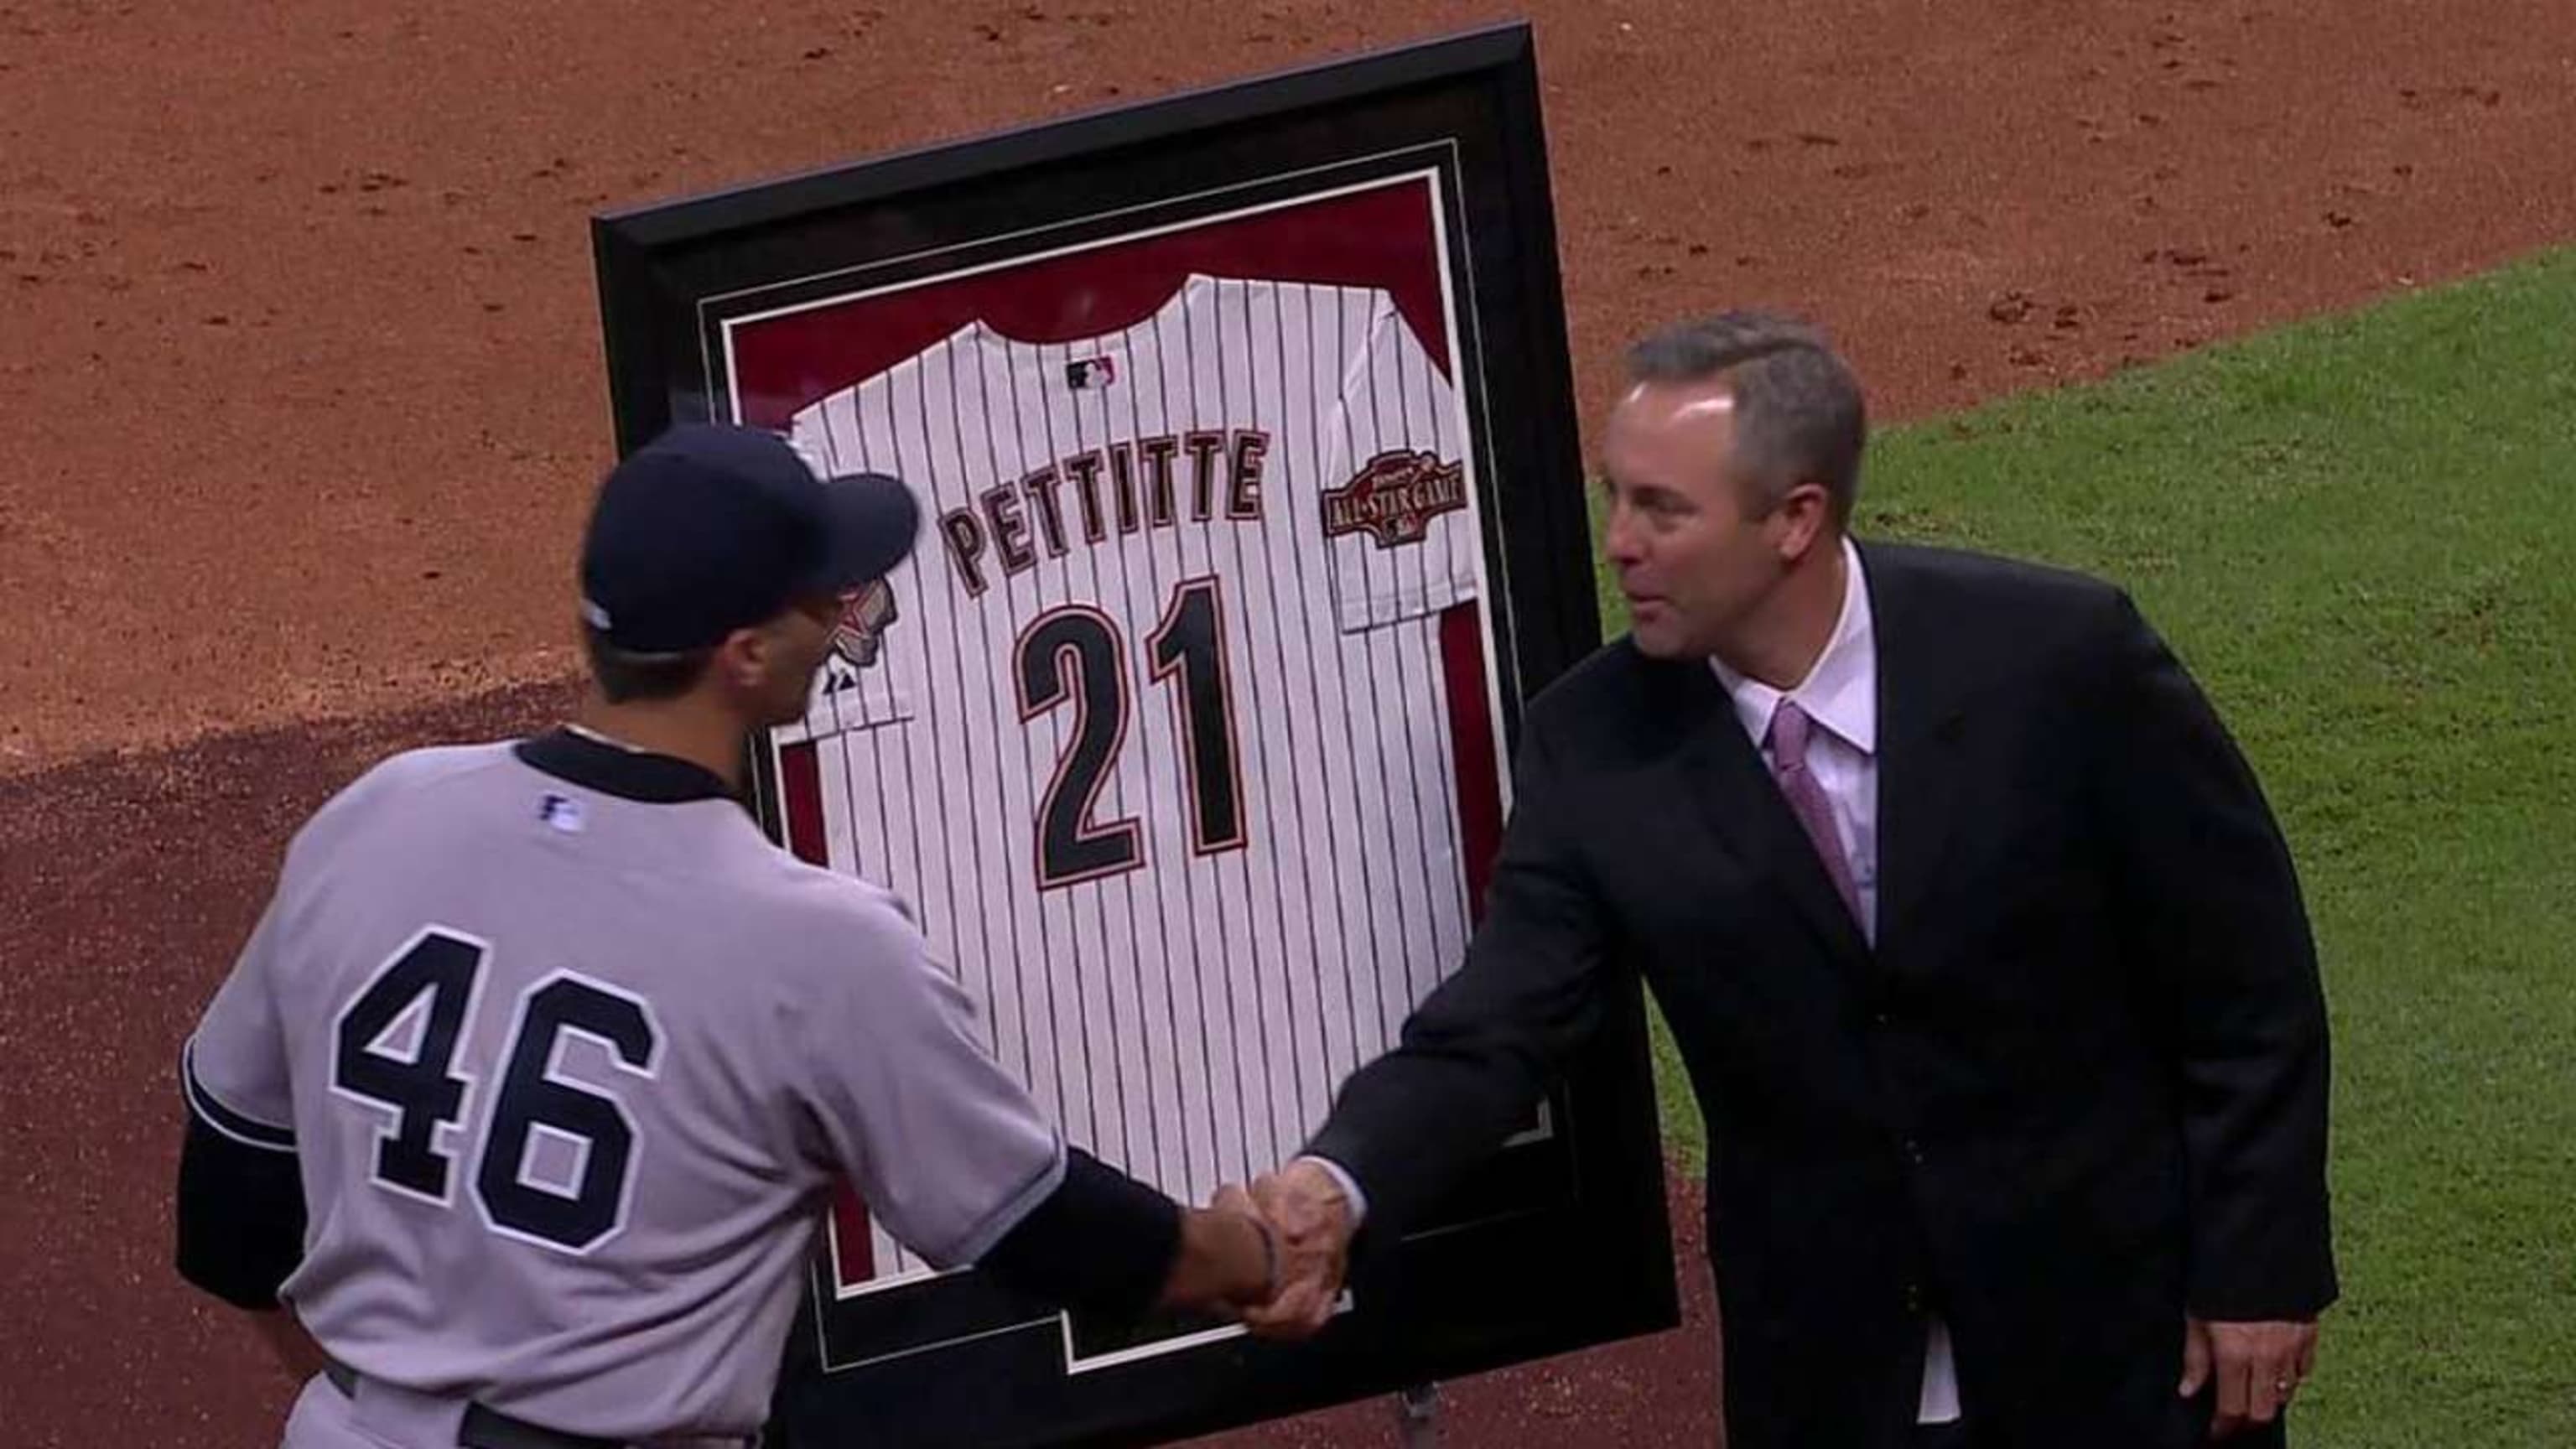 Yankees' Andy Pettitte announces retirement - The San Diego Union